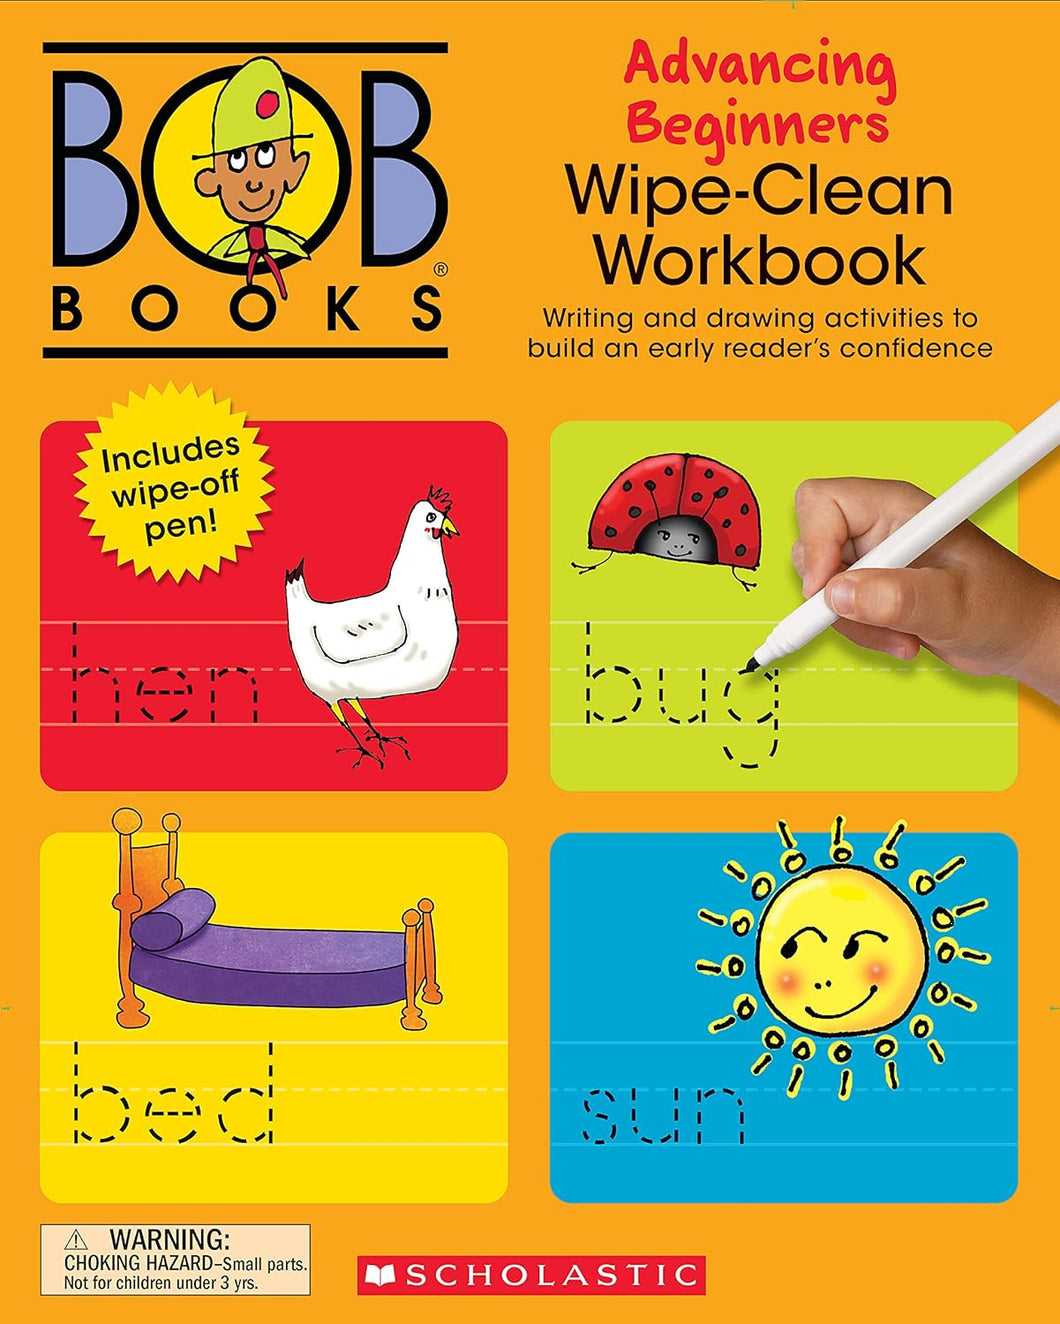 Bob Books - Wipe-Clean Workbook: Advancing Beginners